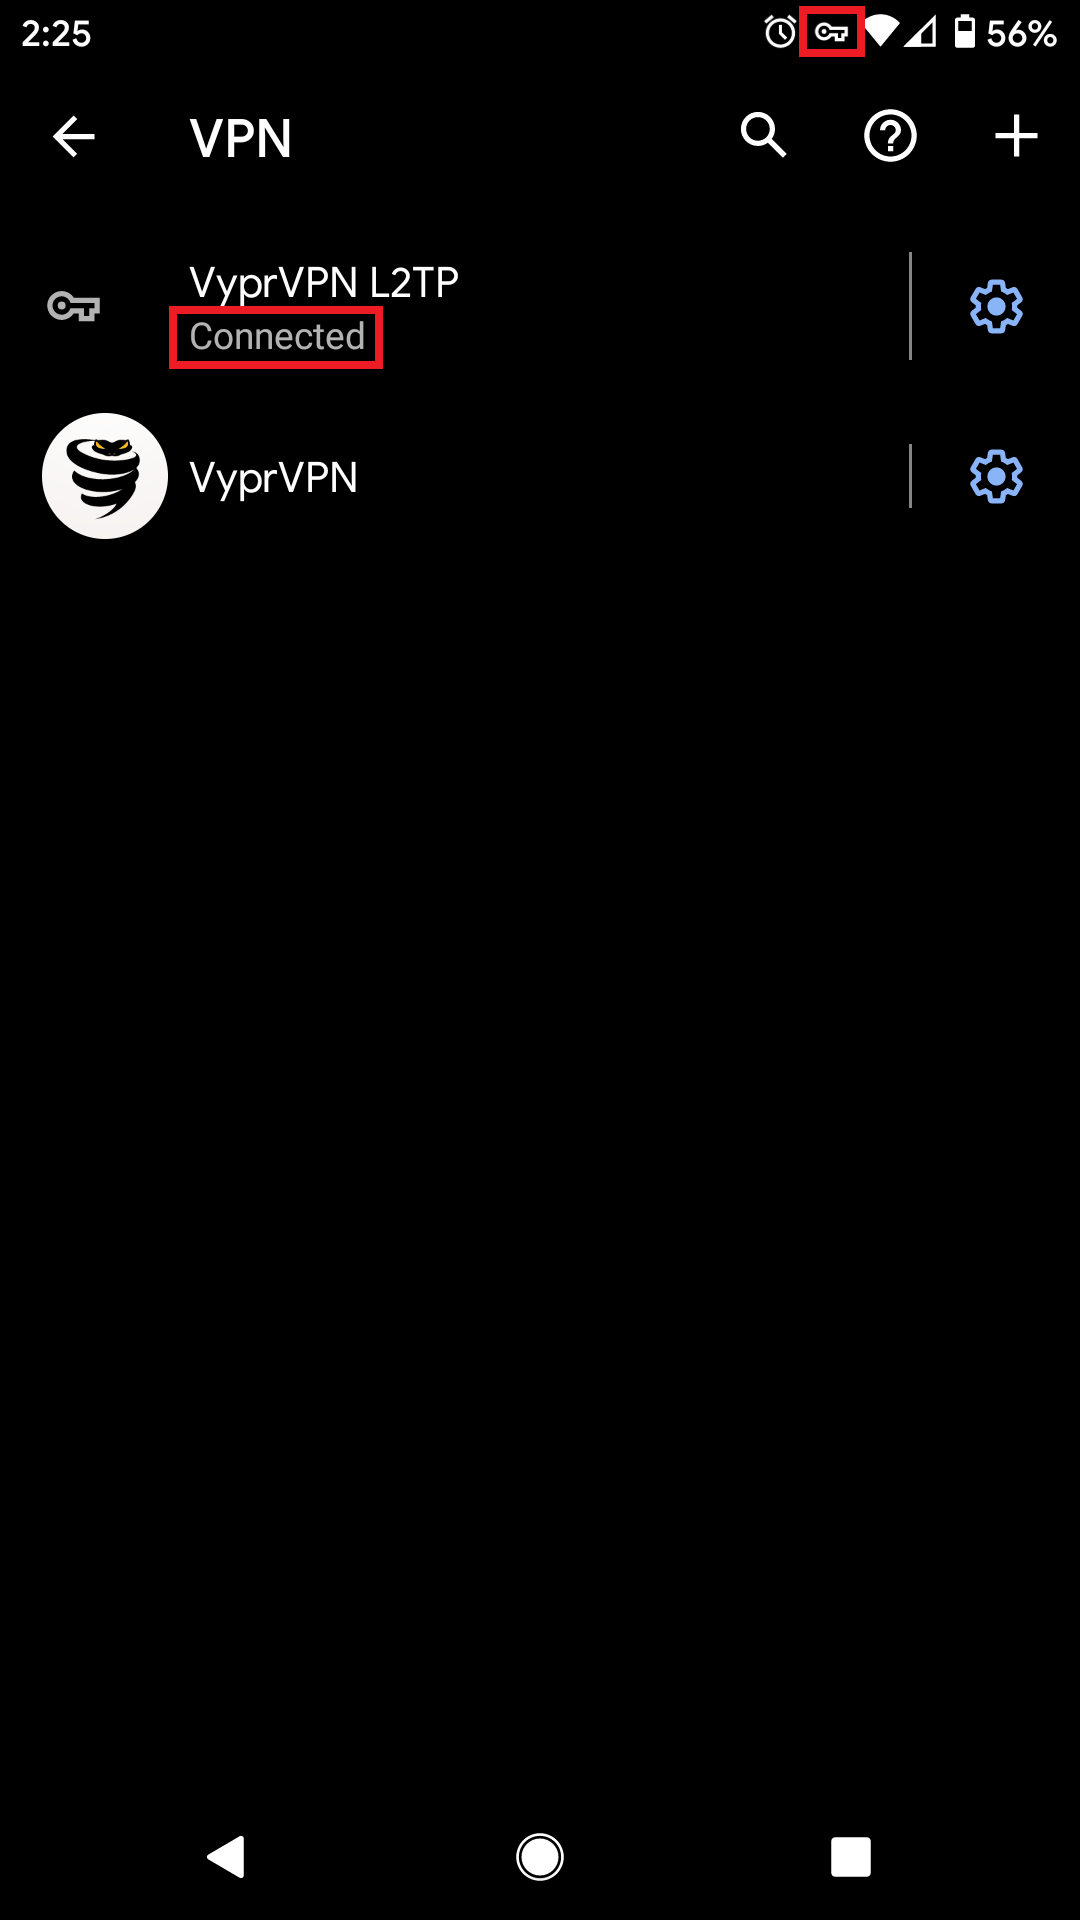 VPN_-_VyprVPN_L2TP_Connected_-_Connected_and_Key_Selected.png